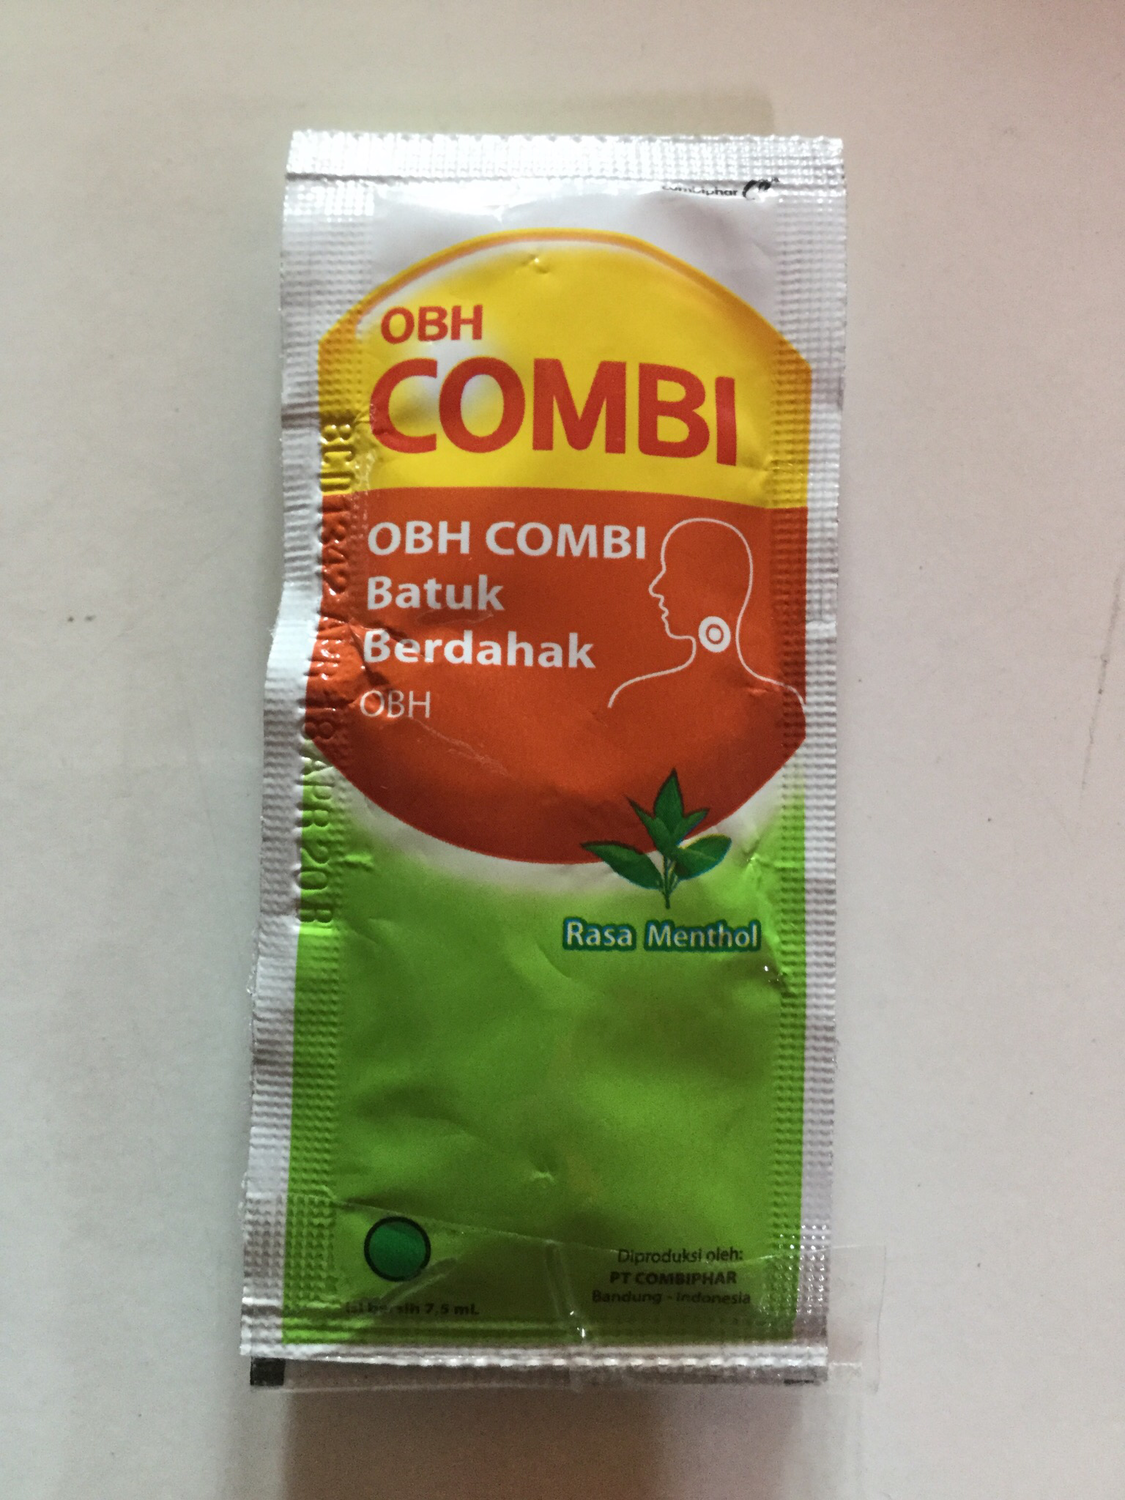 OBH Combi Obat Batuk 7,5ml x 3 sachet